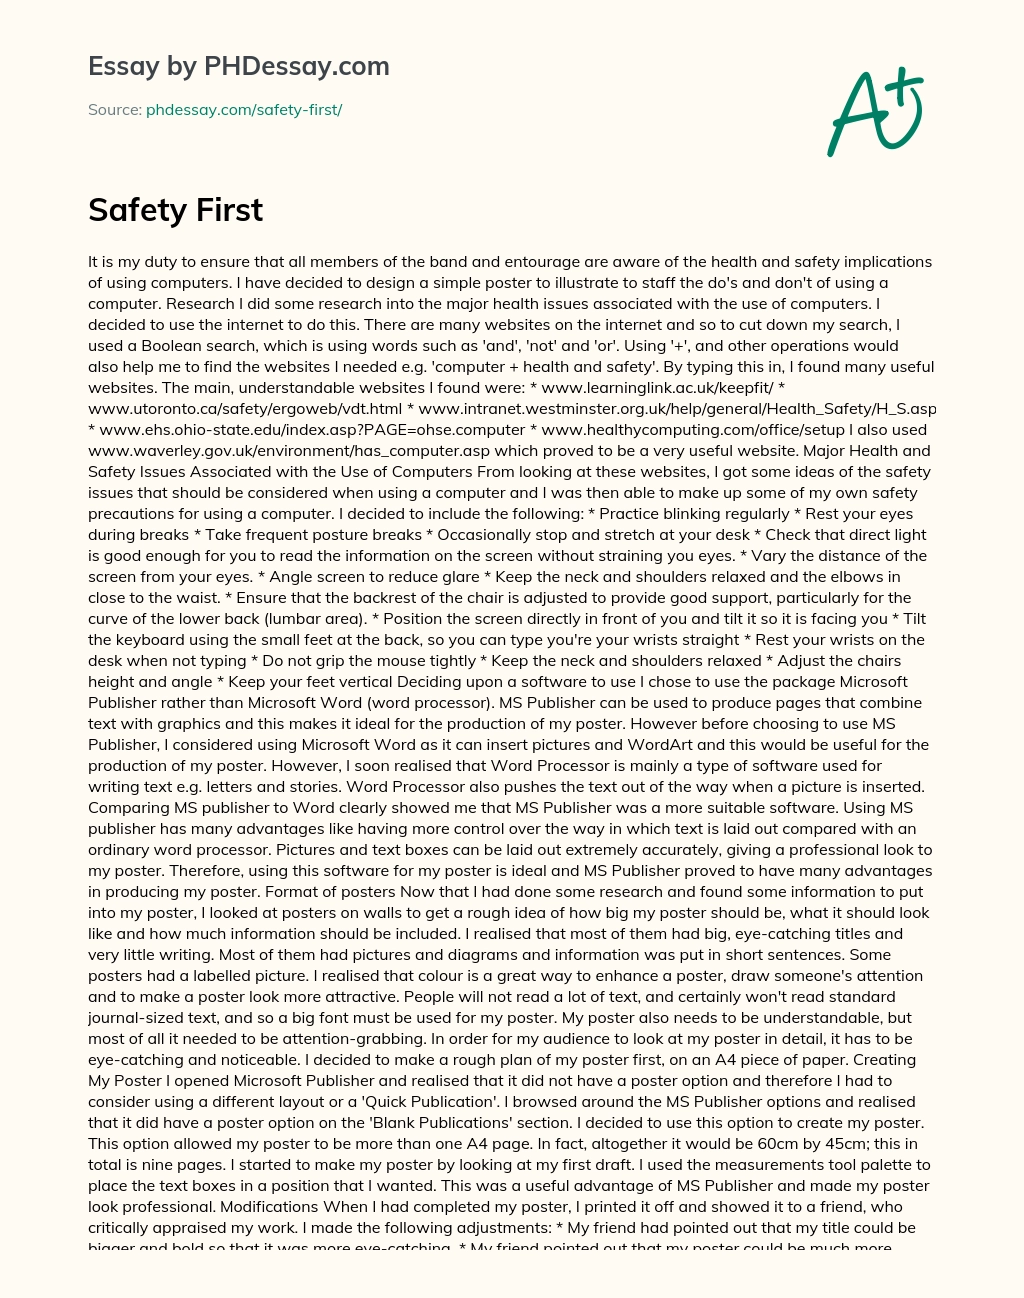 Safety First essay